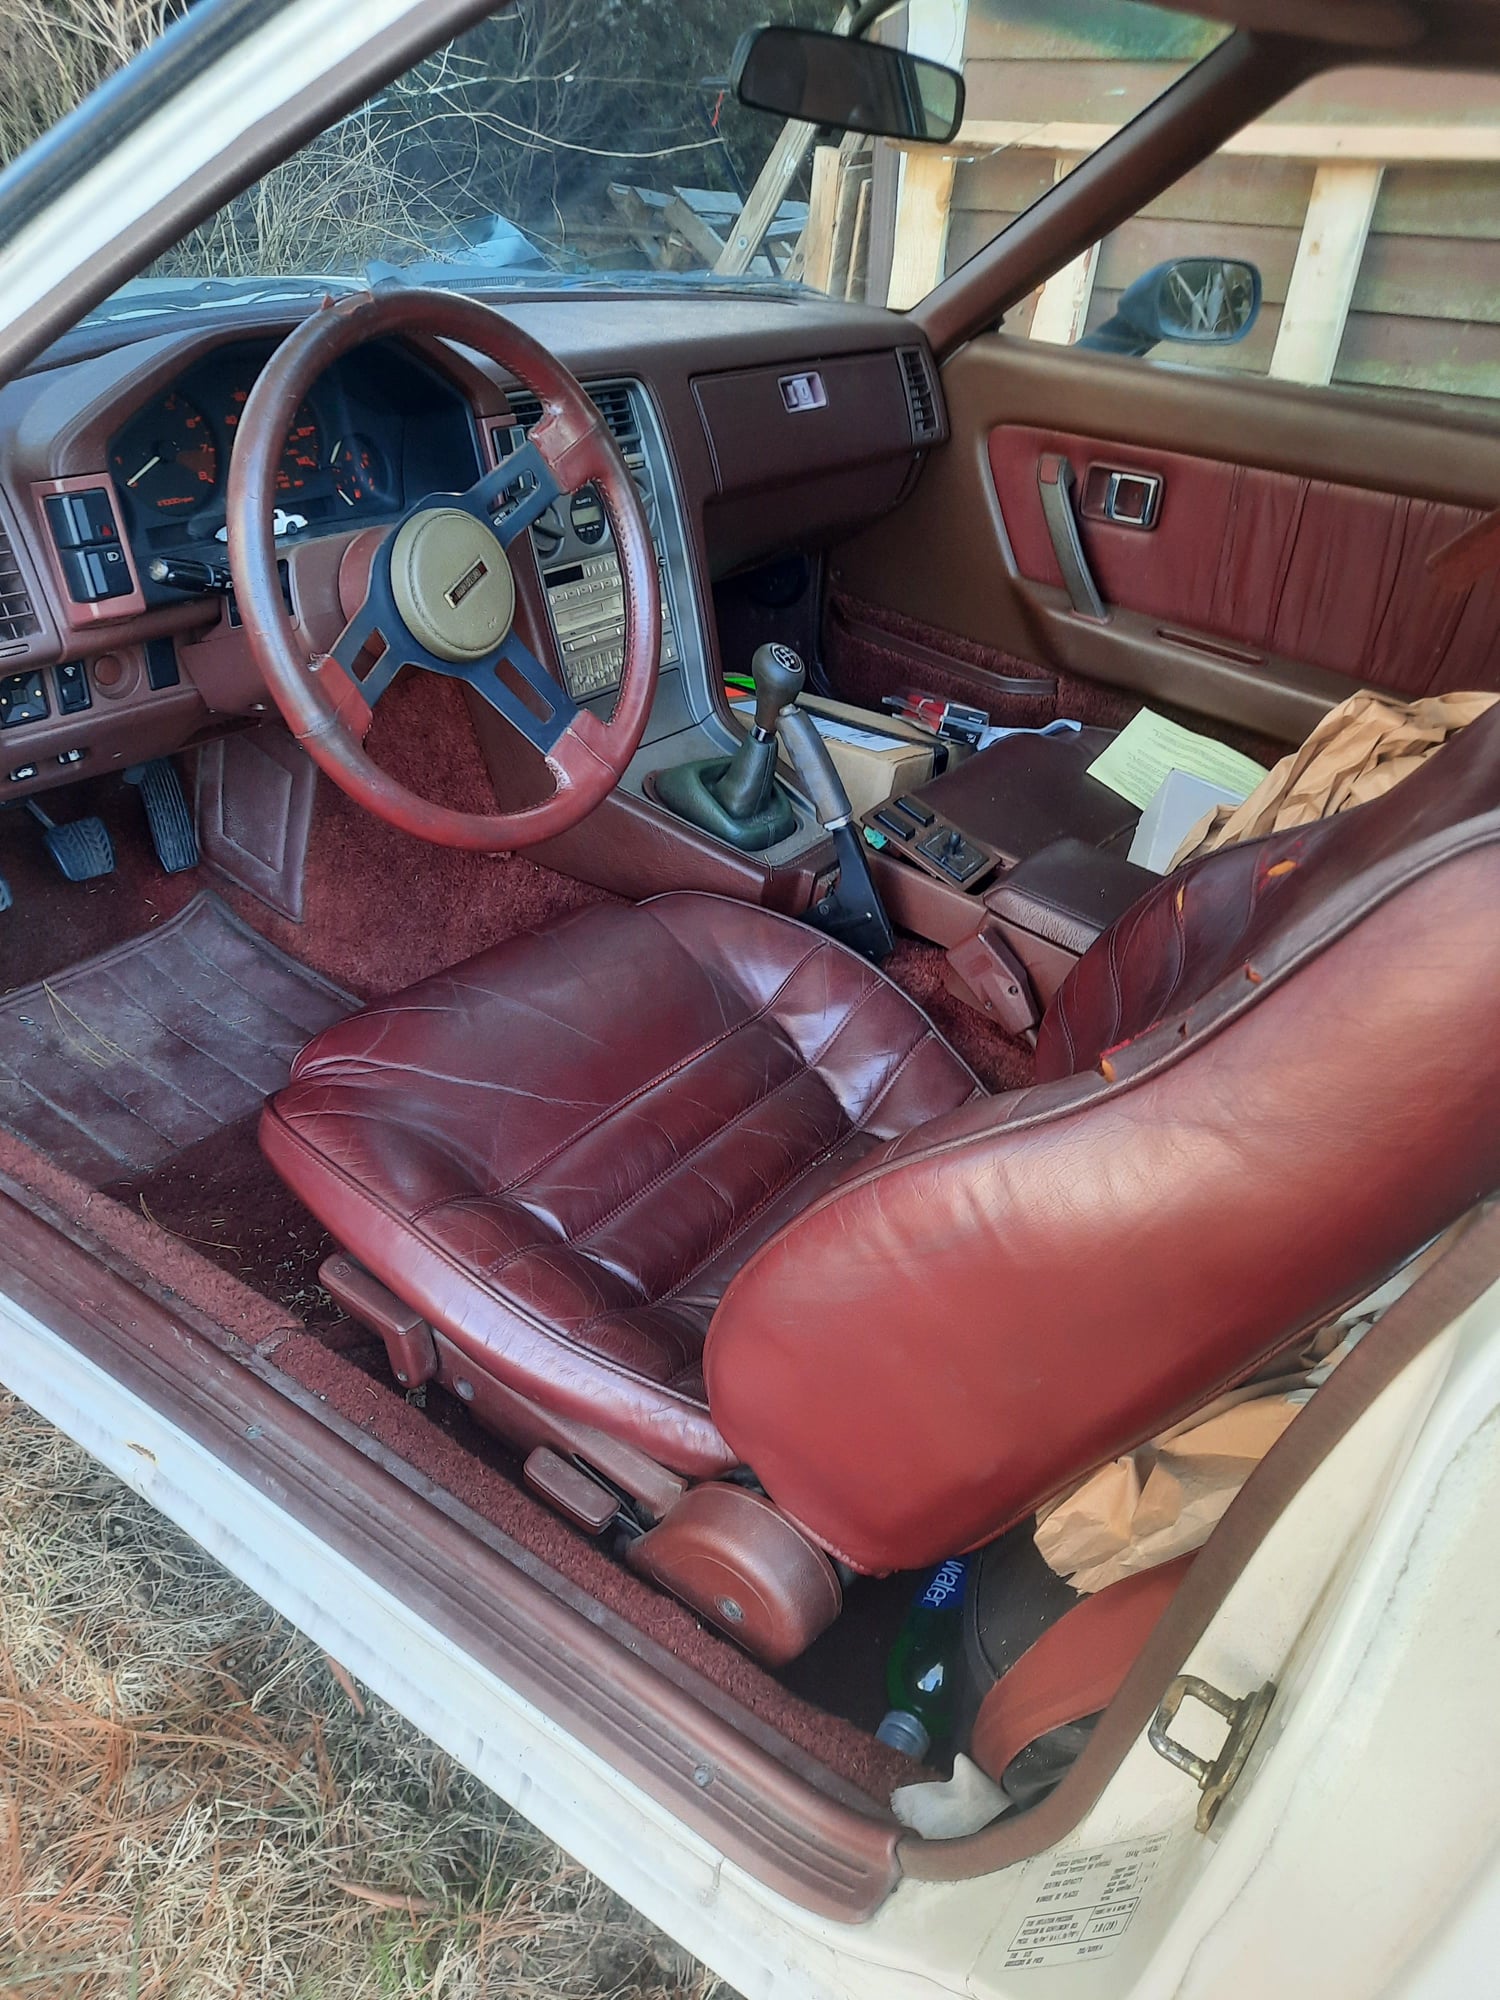 1985 Mazda RX-7 - '85 GSL-SE project car $50 OBO - Used - VIN JM1FB3320F0865868 - 140,516 Miles - Other - 2WD - Manual - Hatchback - White - Cherry Hill, NJ 08002, United States